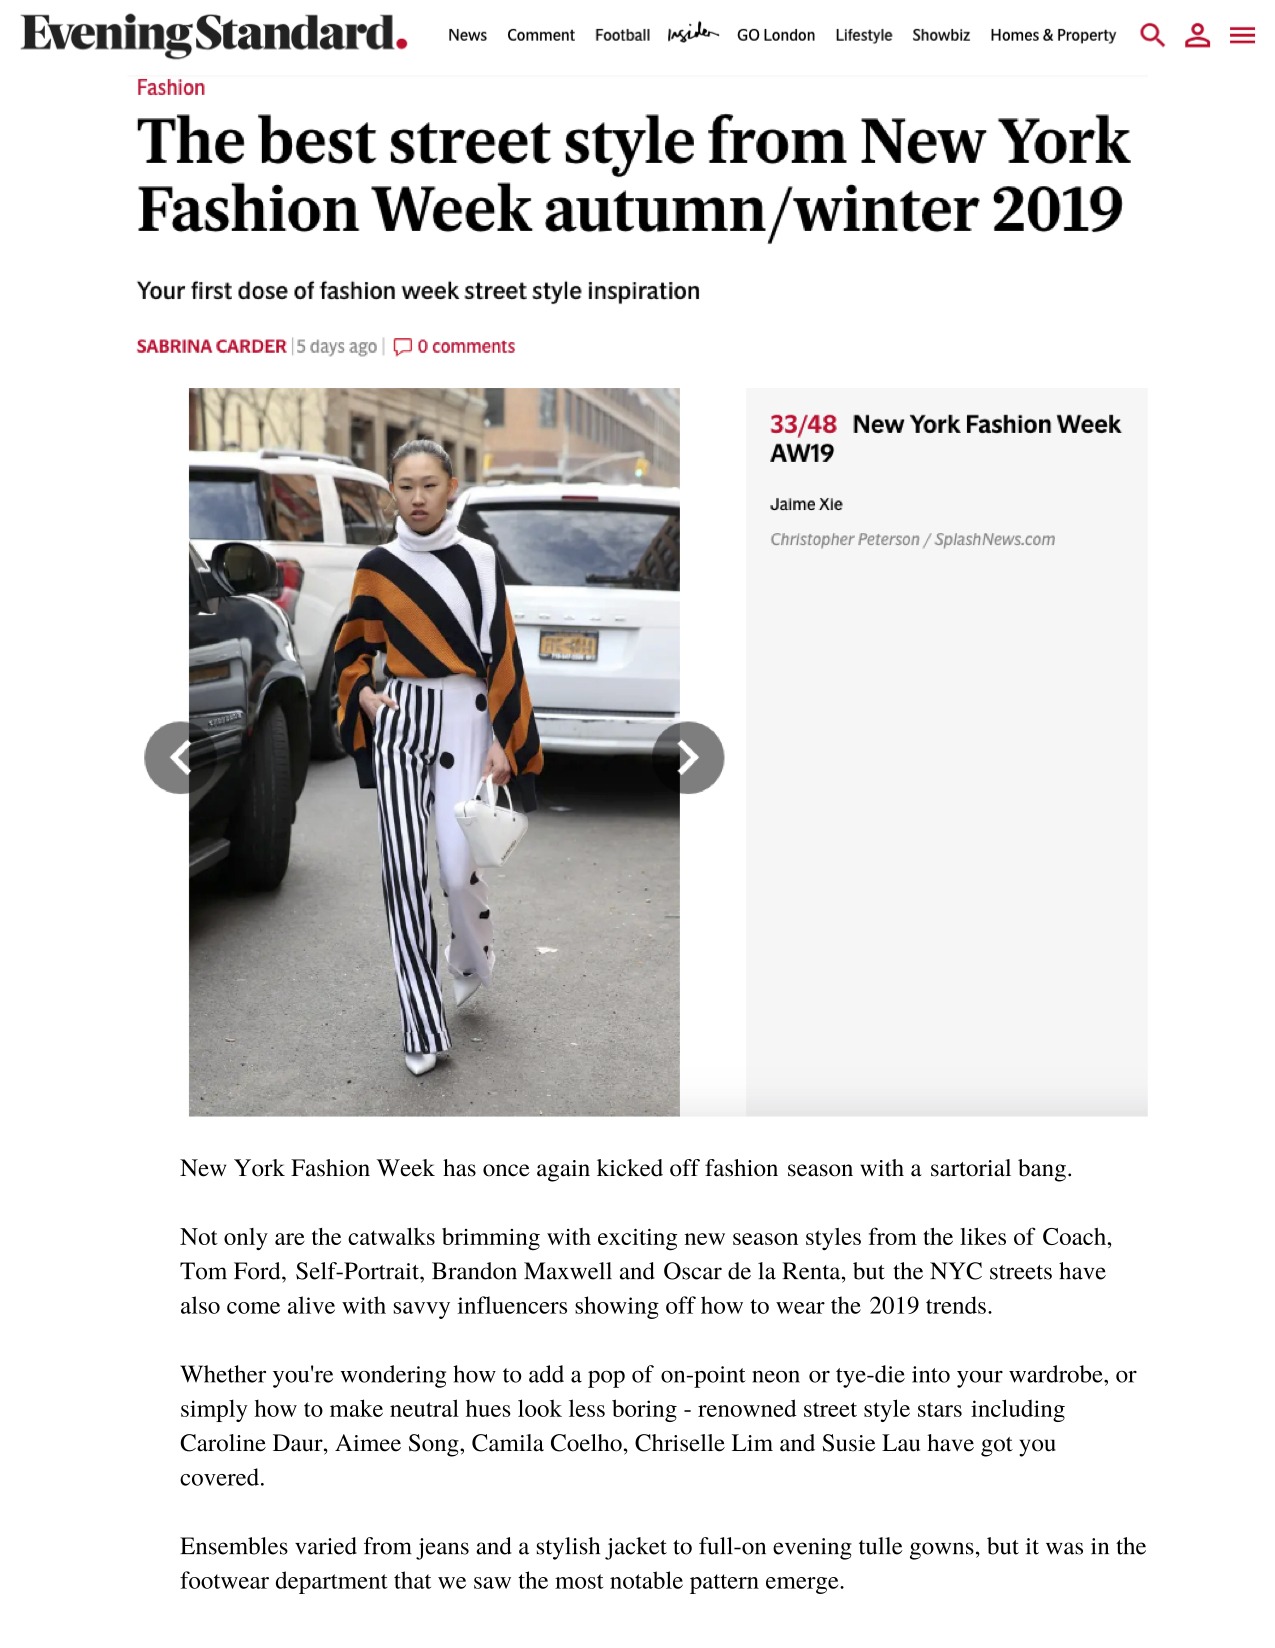 Evening Standard: The Best Street Style from New York Fashion Week Autumn/Winter 2019